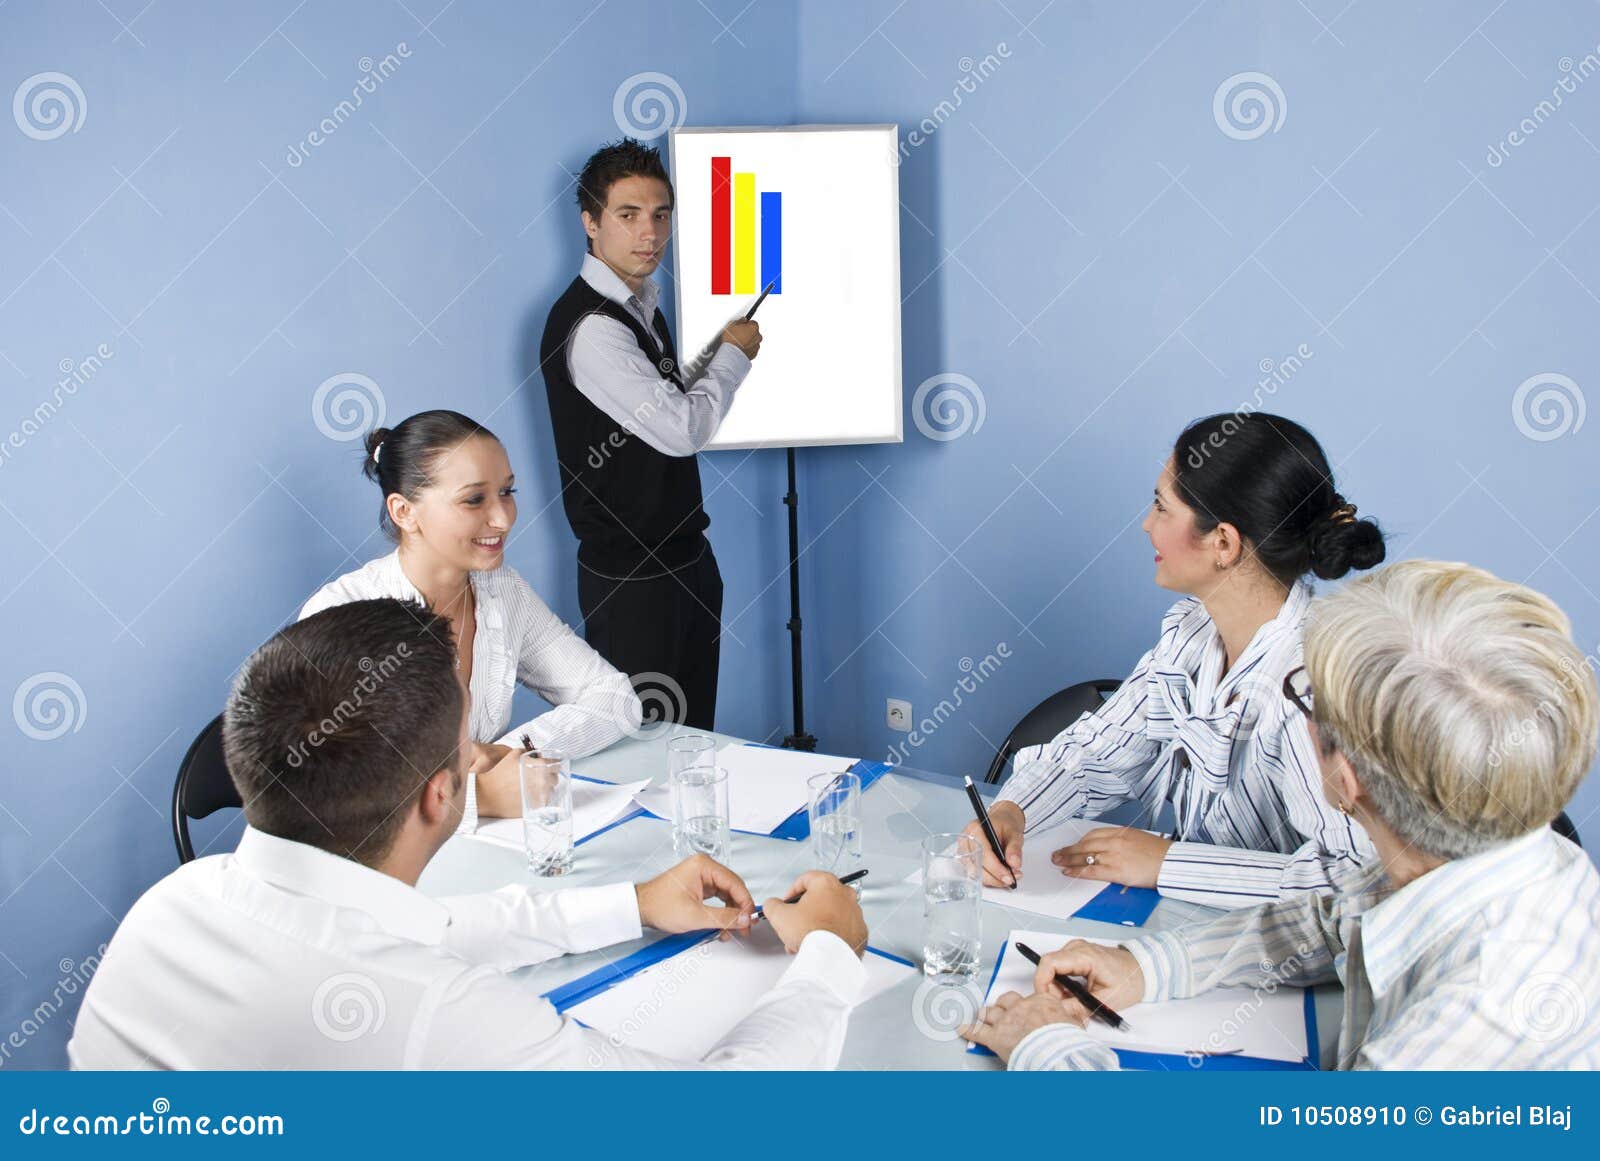 meeting presentation stock photo